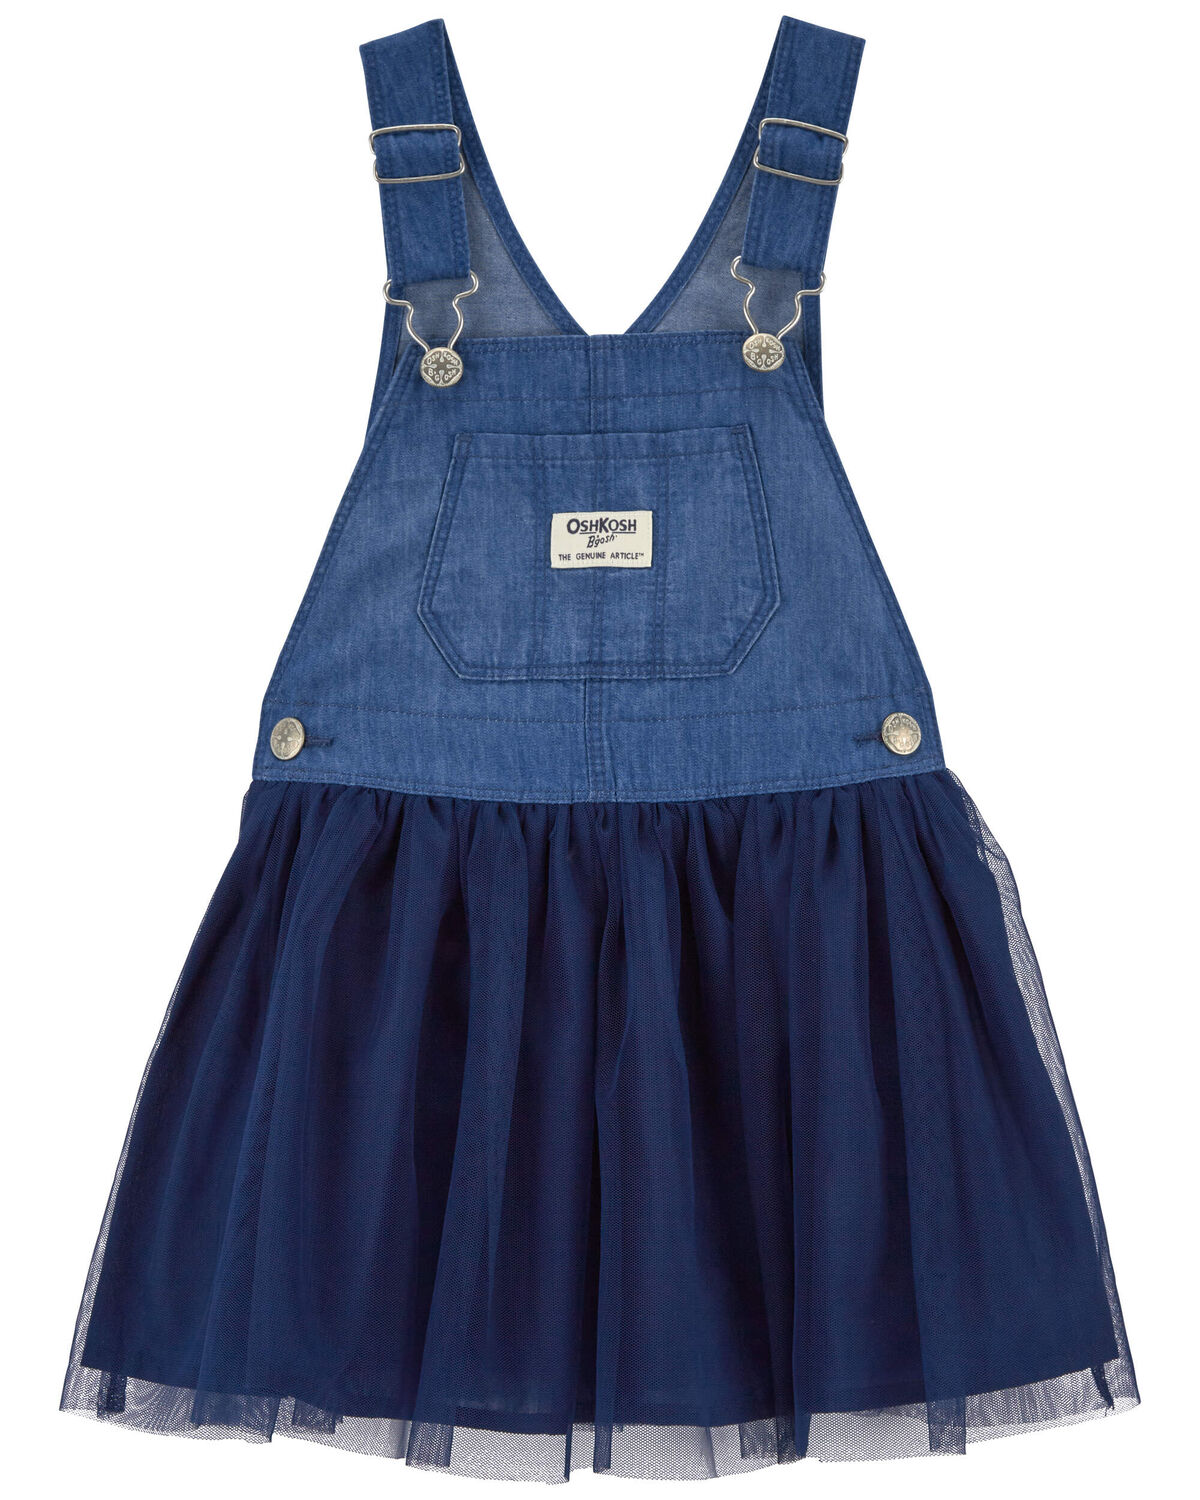 Toddler Tulle and Denim Jumper Dress
